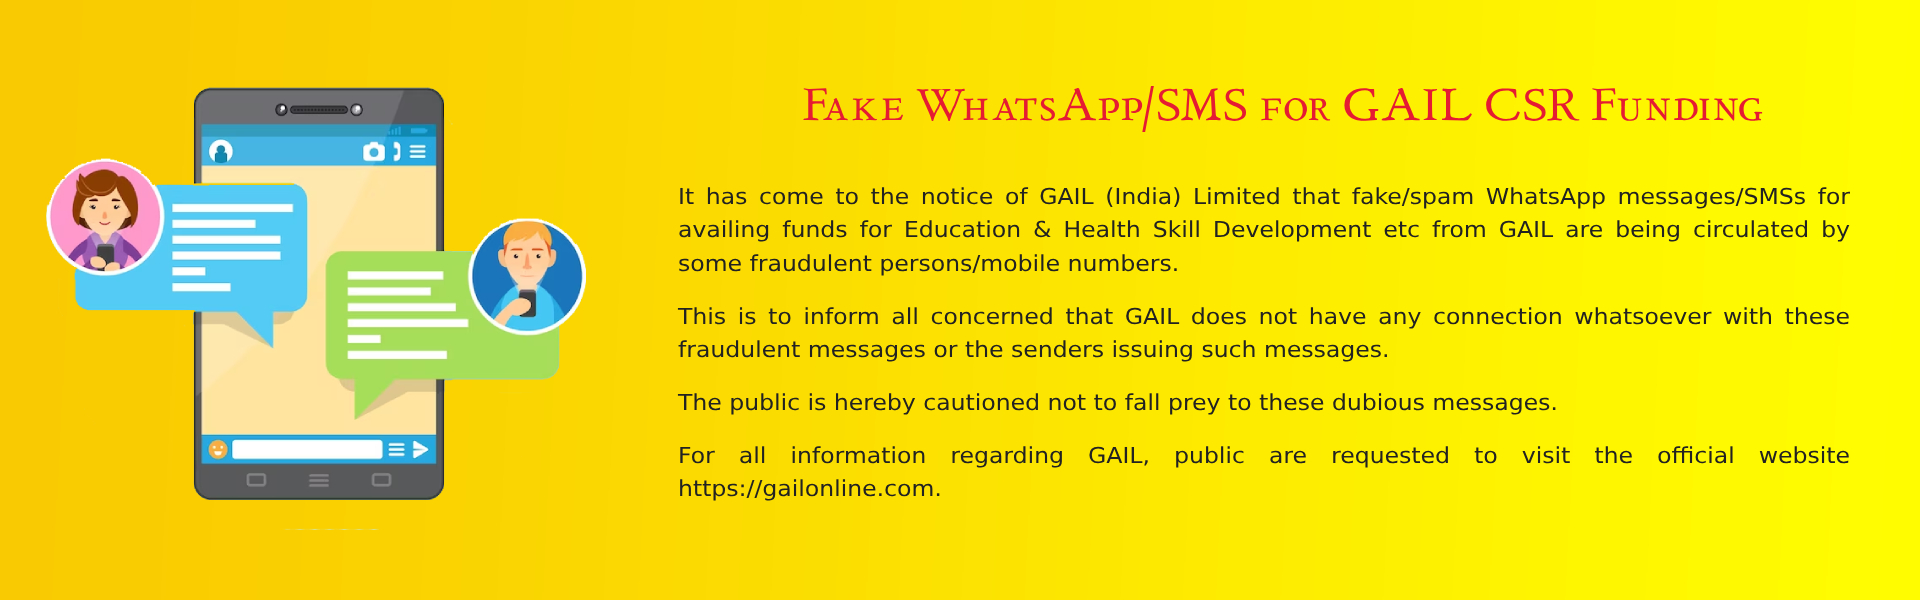 Fake WhatsApp/SMS for GAIL CSR Funding